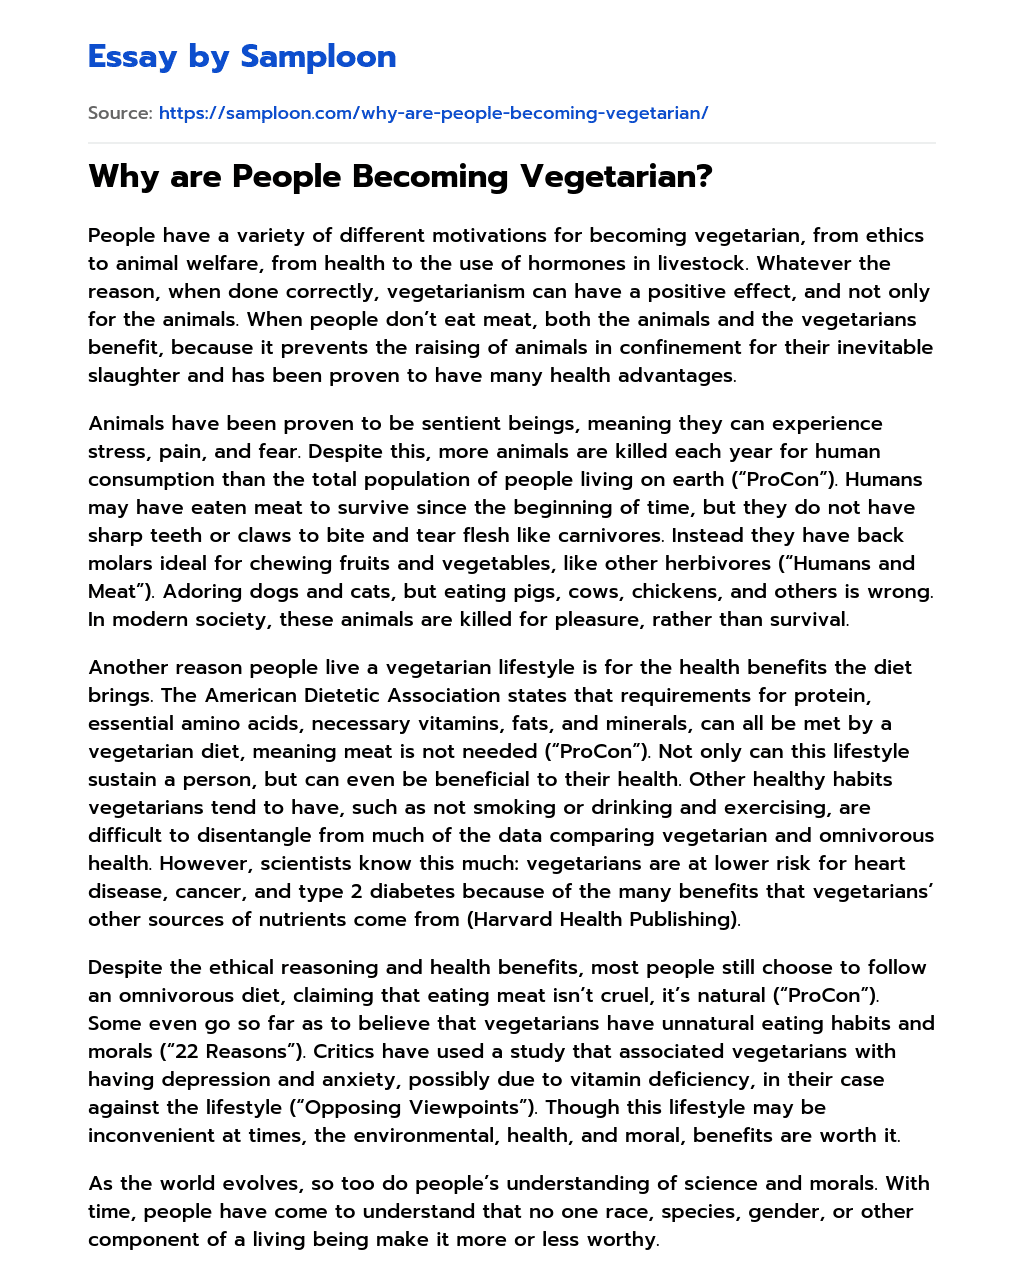 essay about vegan